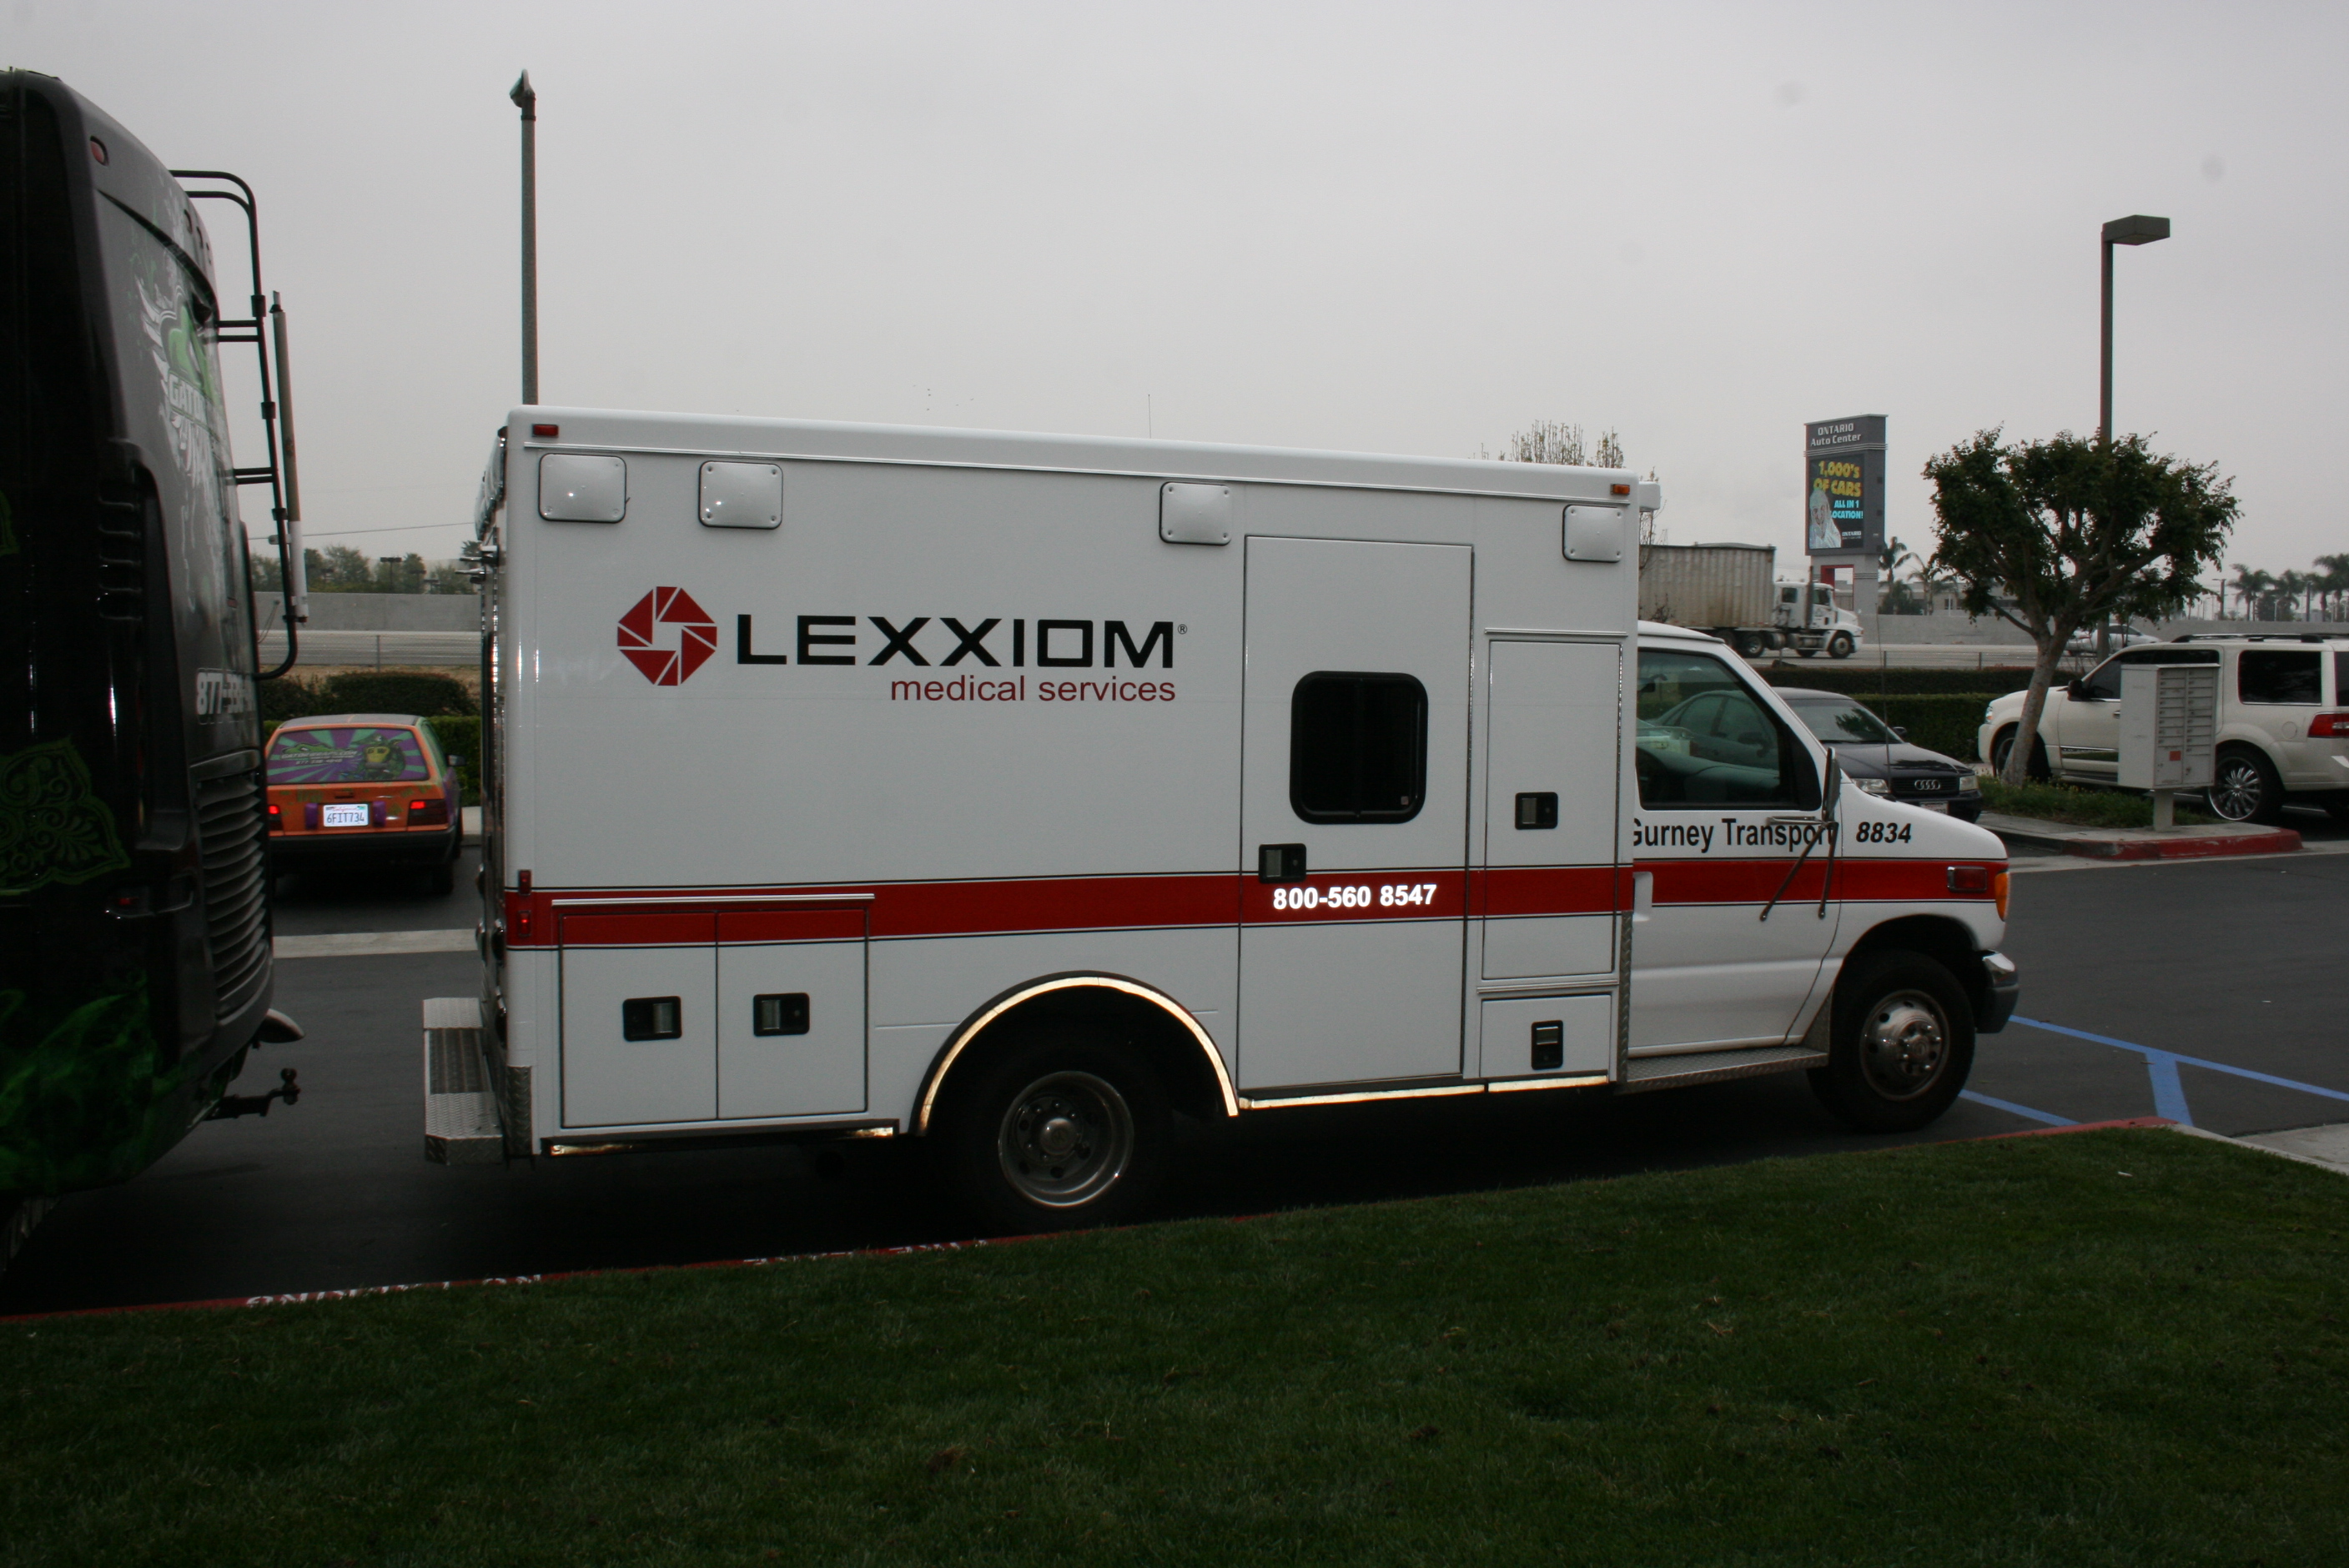 Lexxiom medical services fleet car wrap